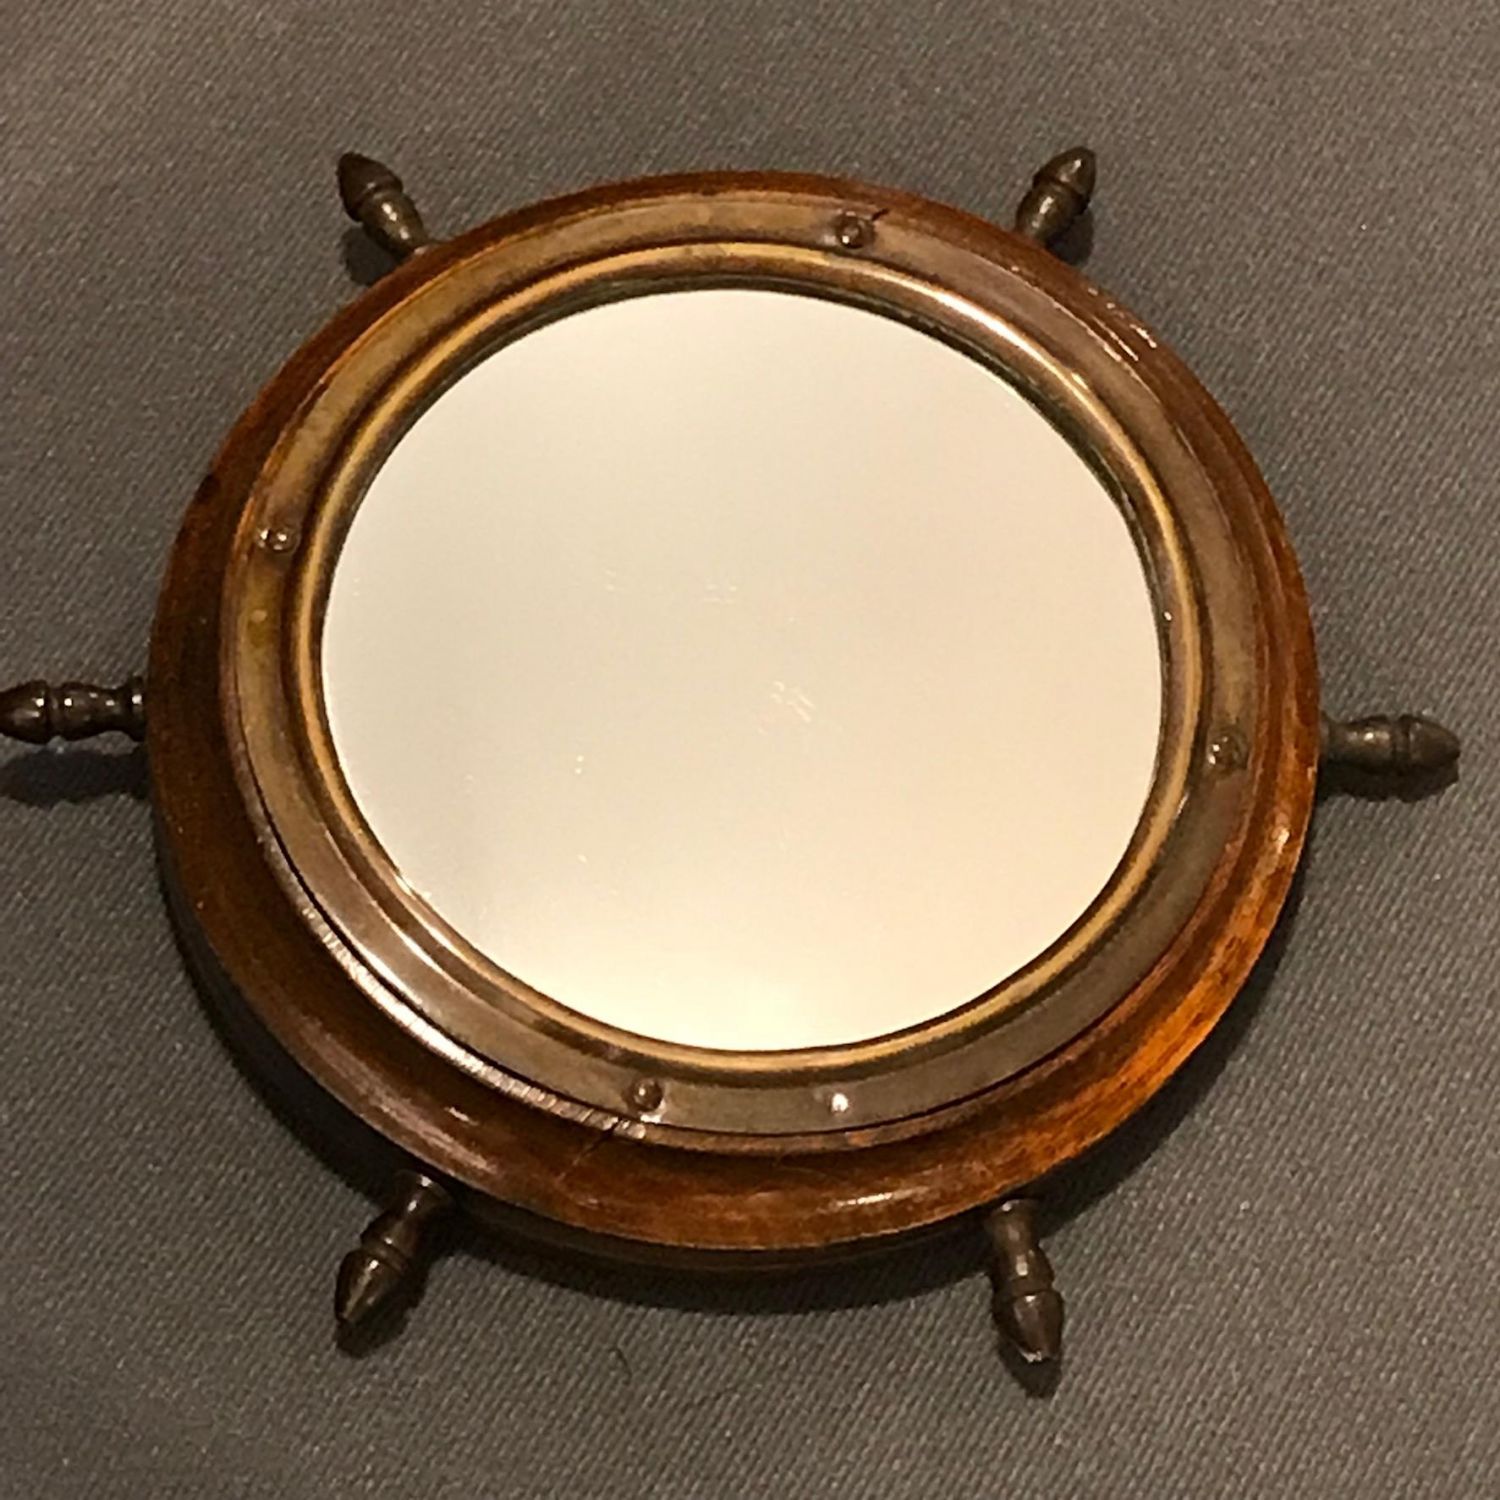 Small Wooden Framed Ships Wheel Mirror, Ship Wheel Wall Mirror